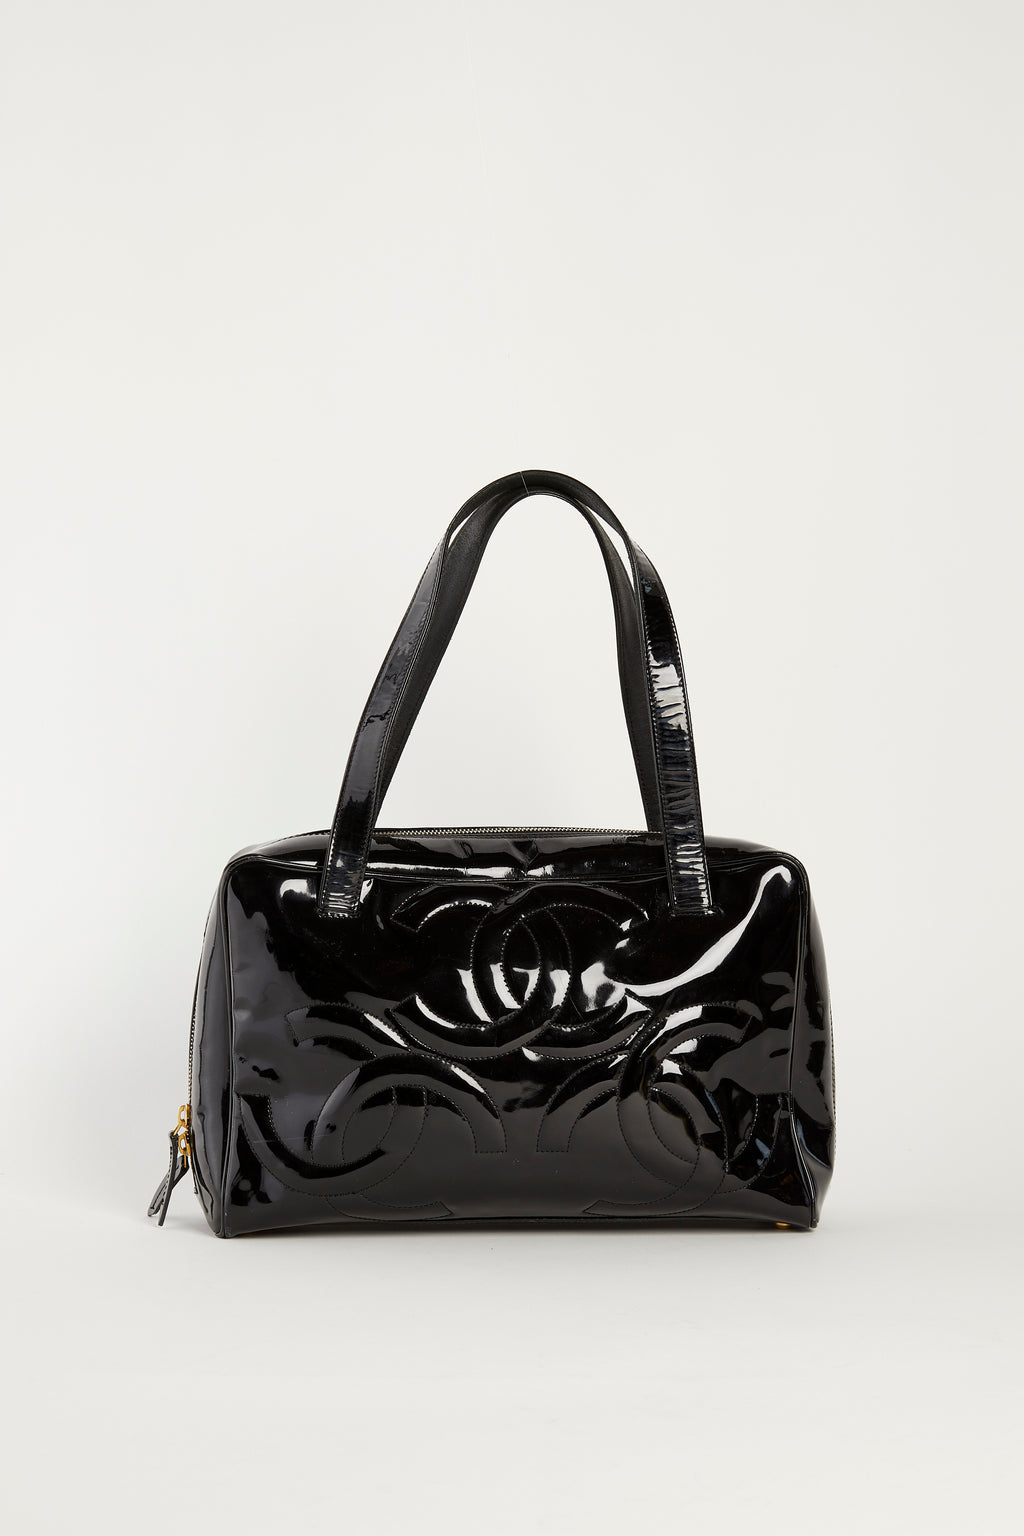 2000s Chanel Black Patent Leather CC Shoulder Bag